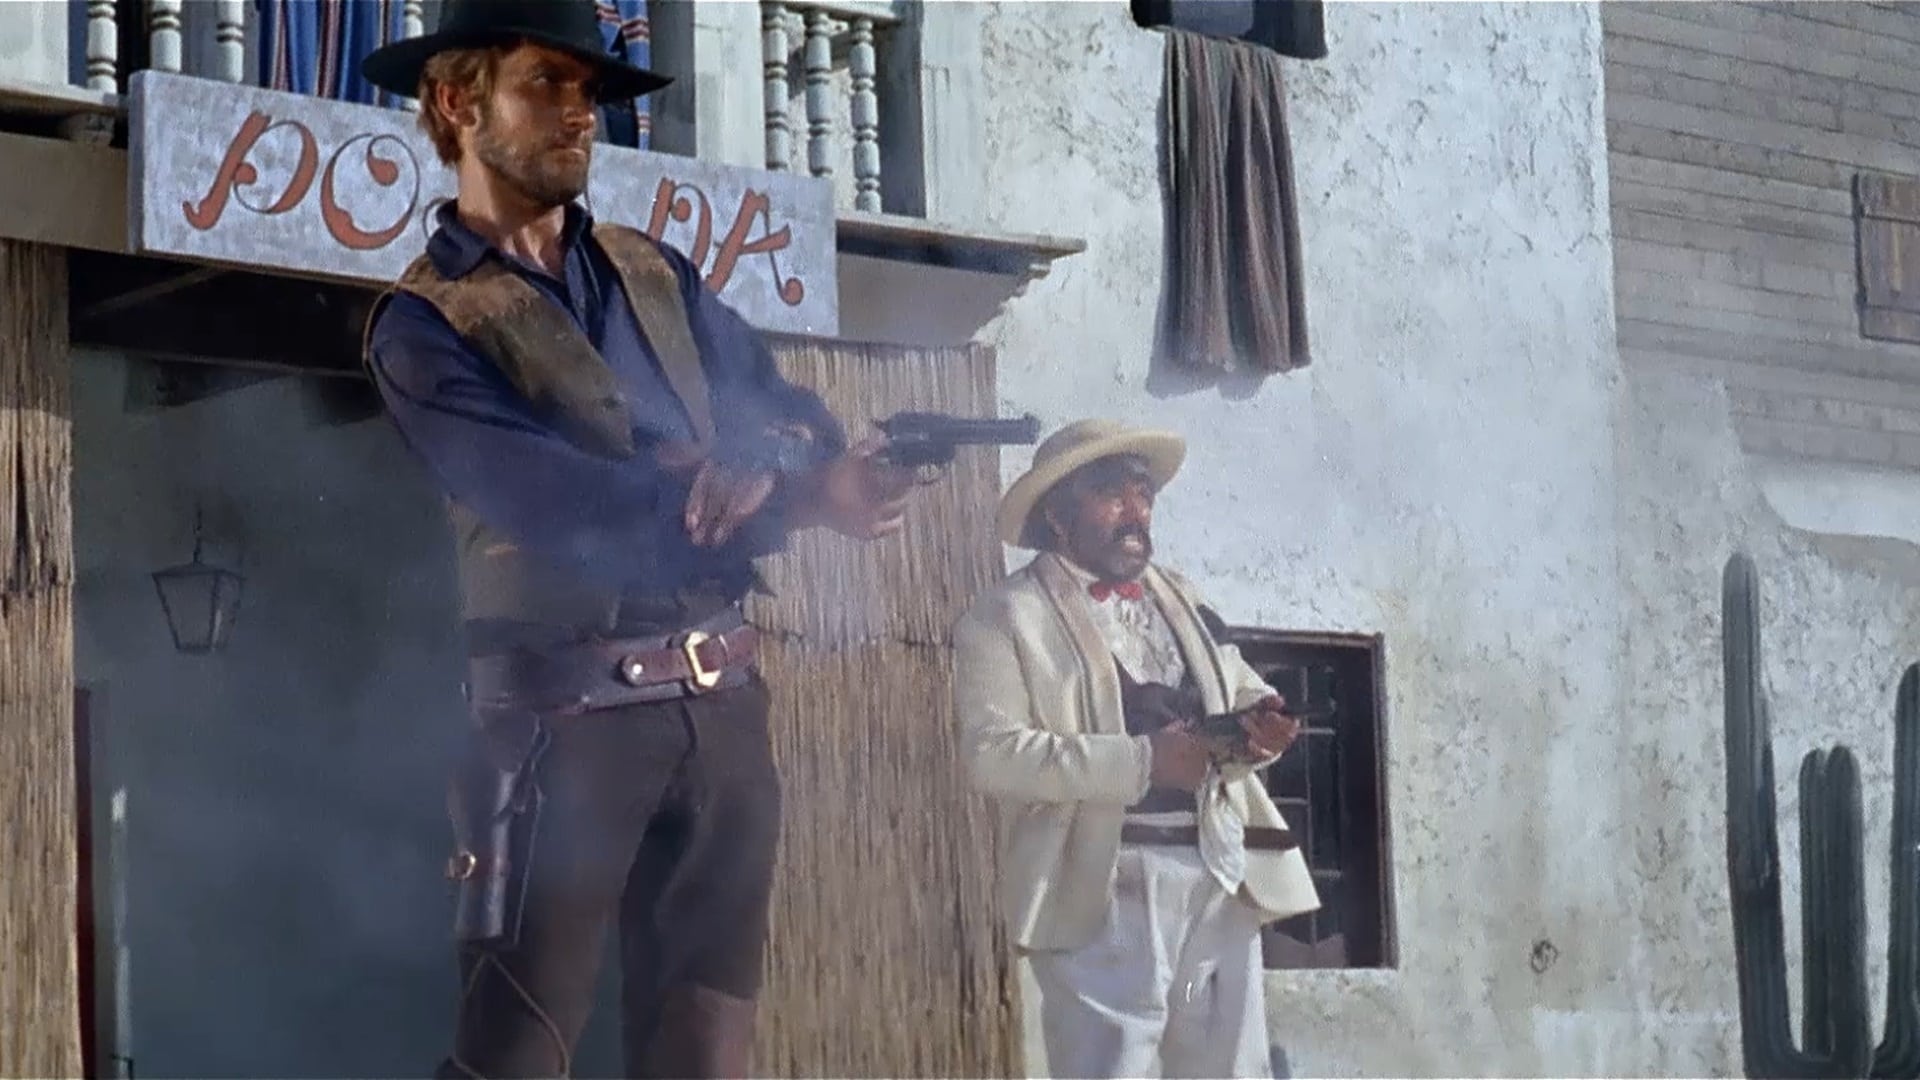 Non aspettare Django, spara (1967)